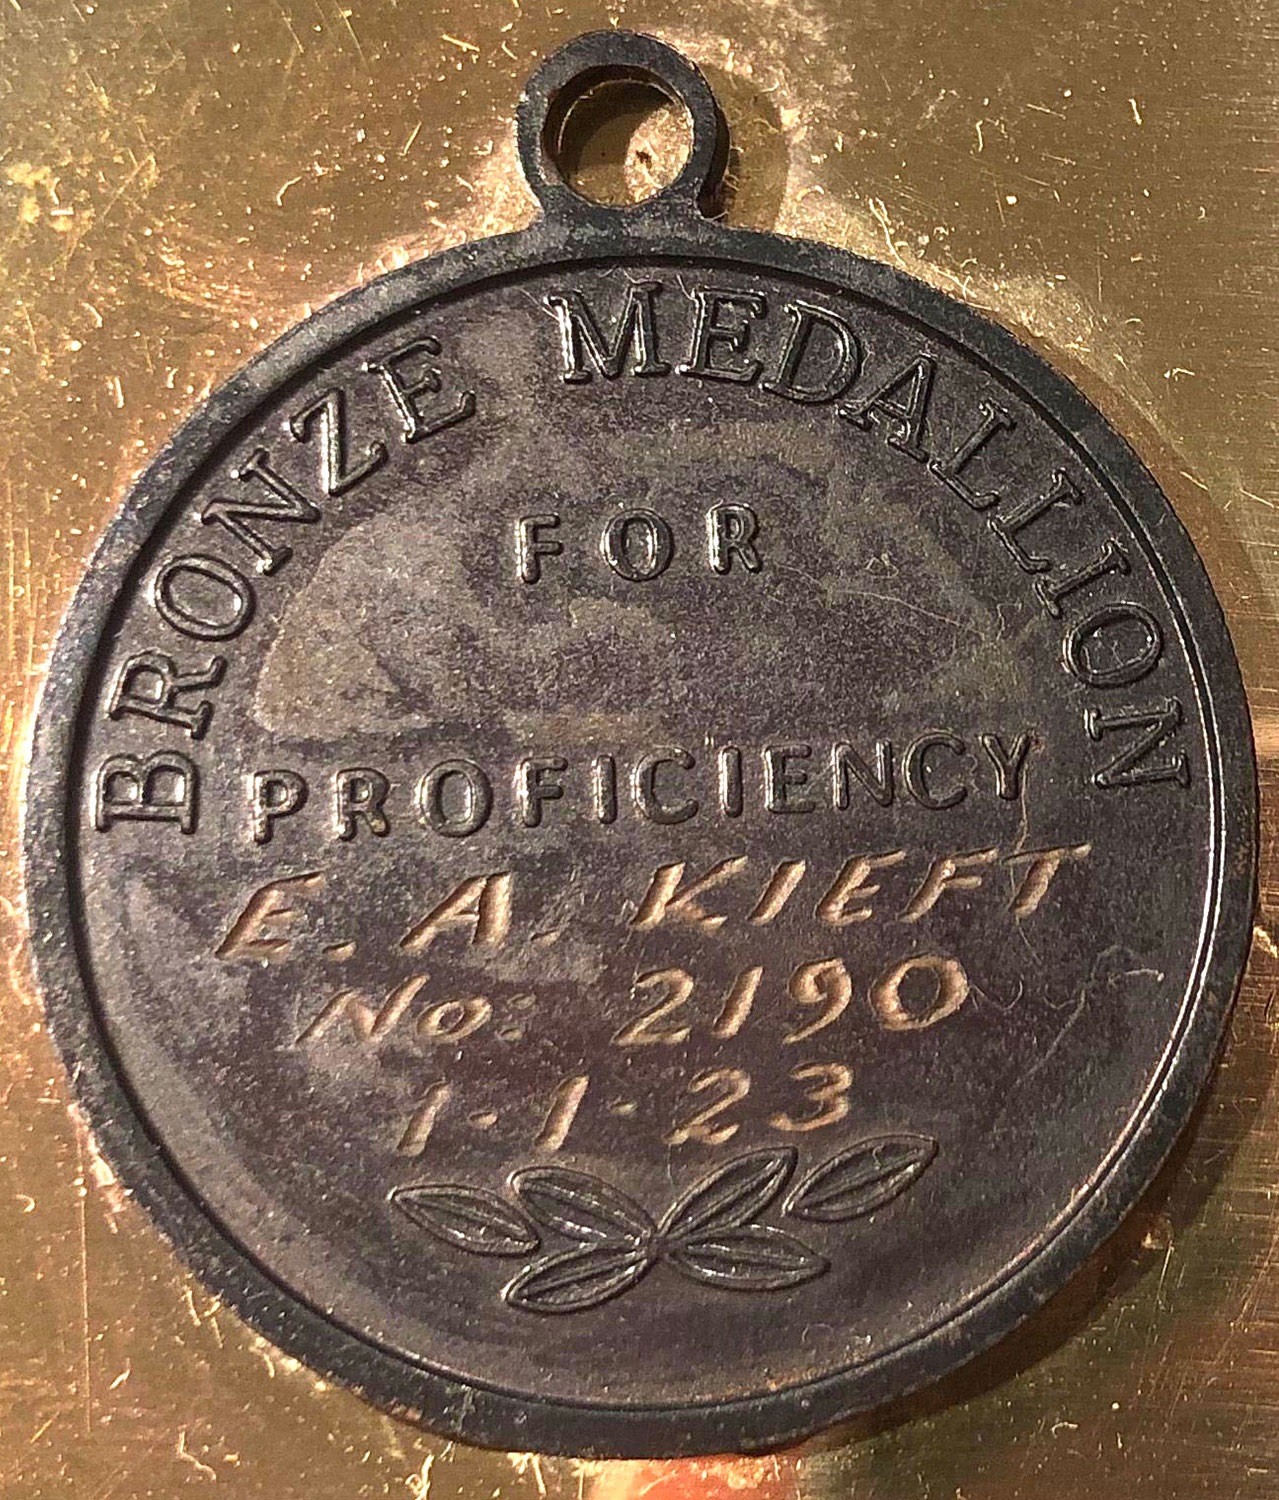 Edie Kieft's bronze medallion